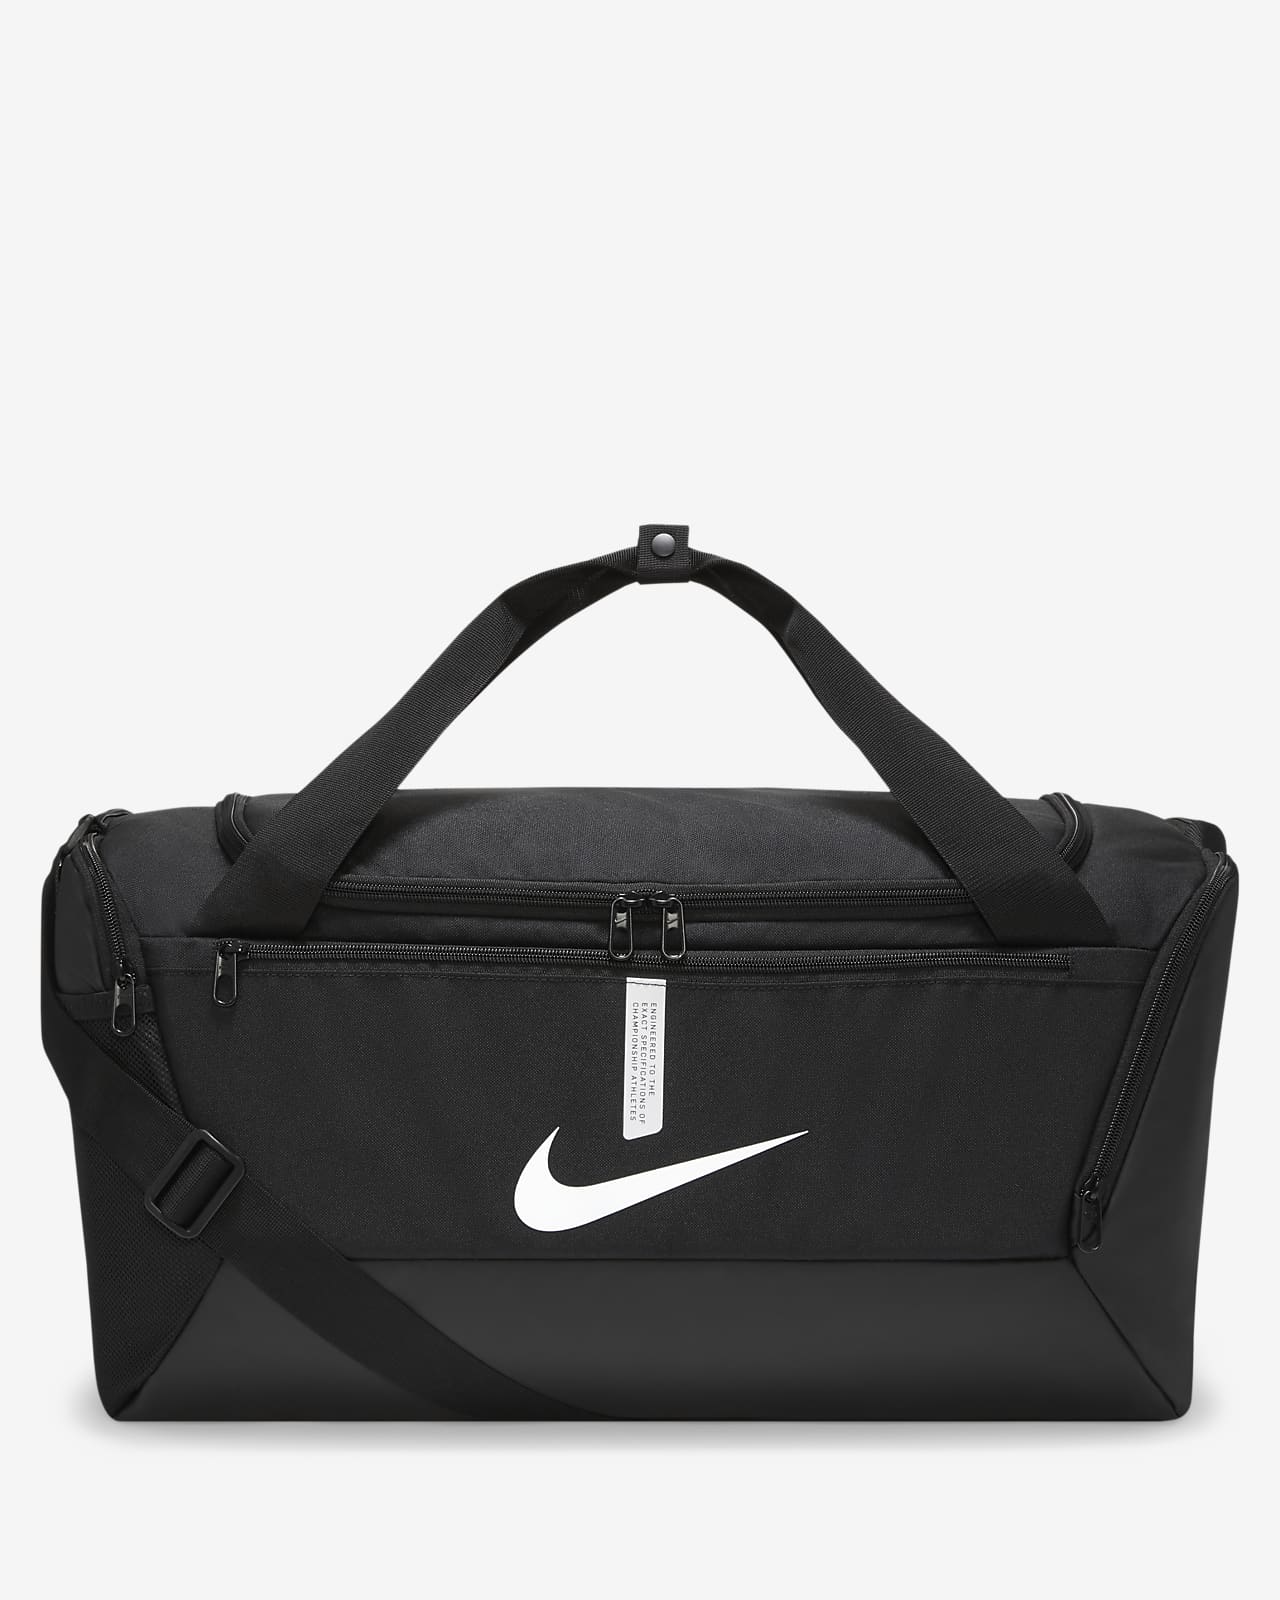 Nike Academy Team Football Duffel Bag (Small, 41L). Nike